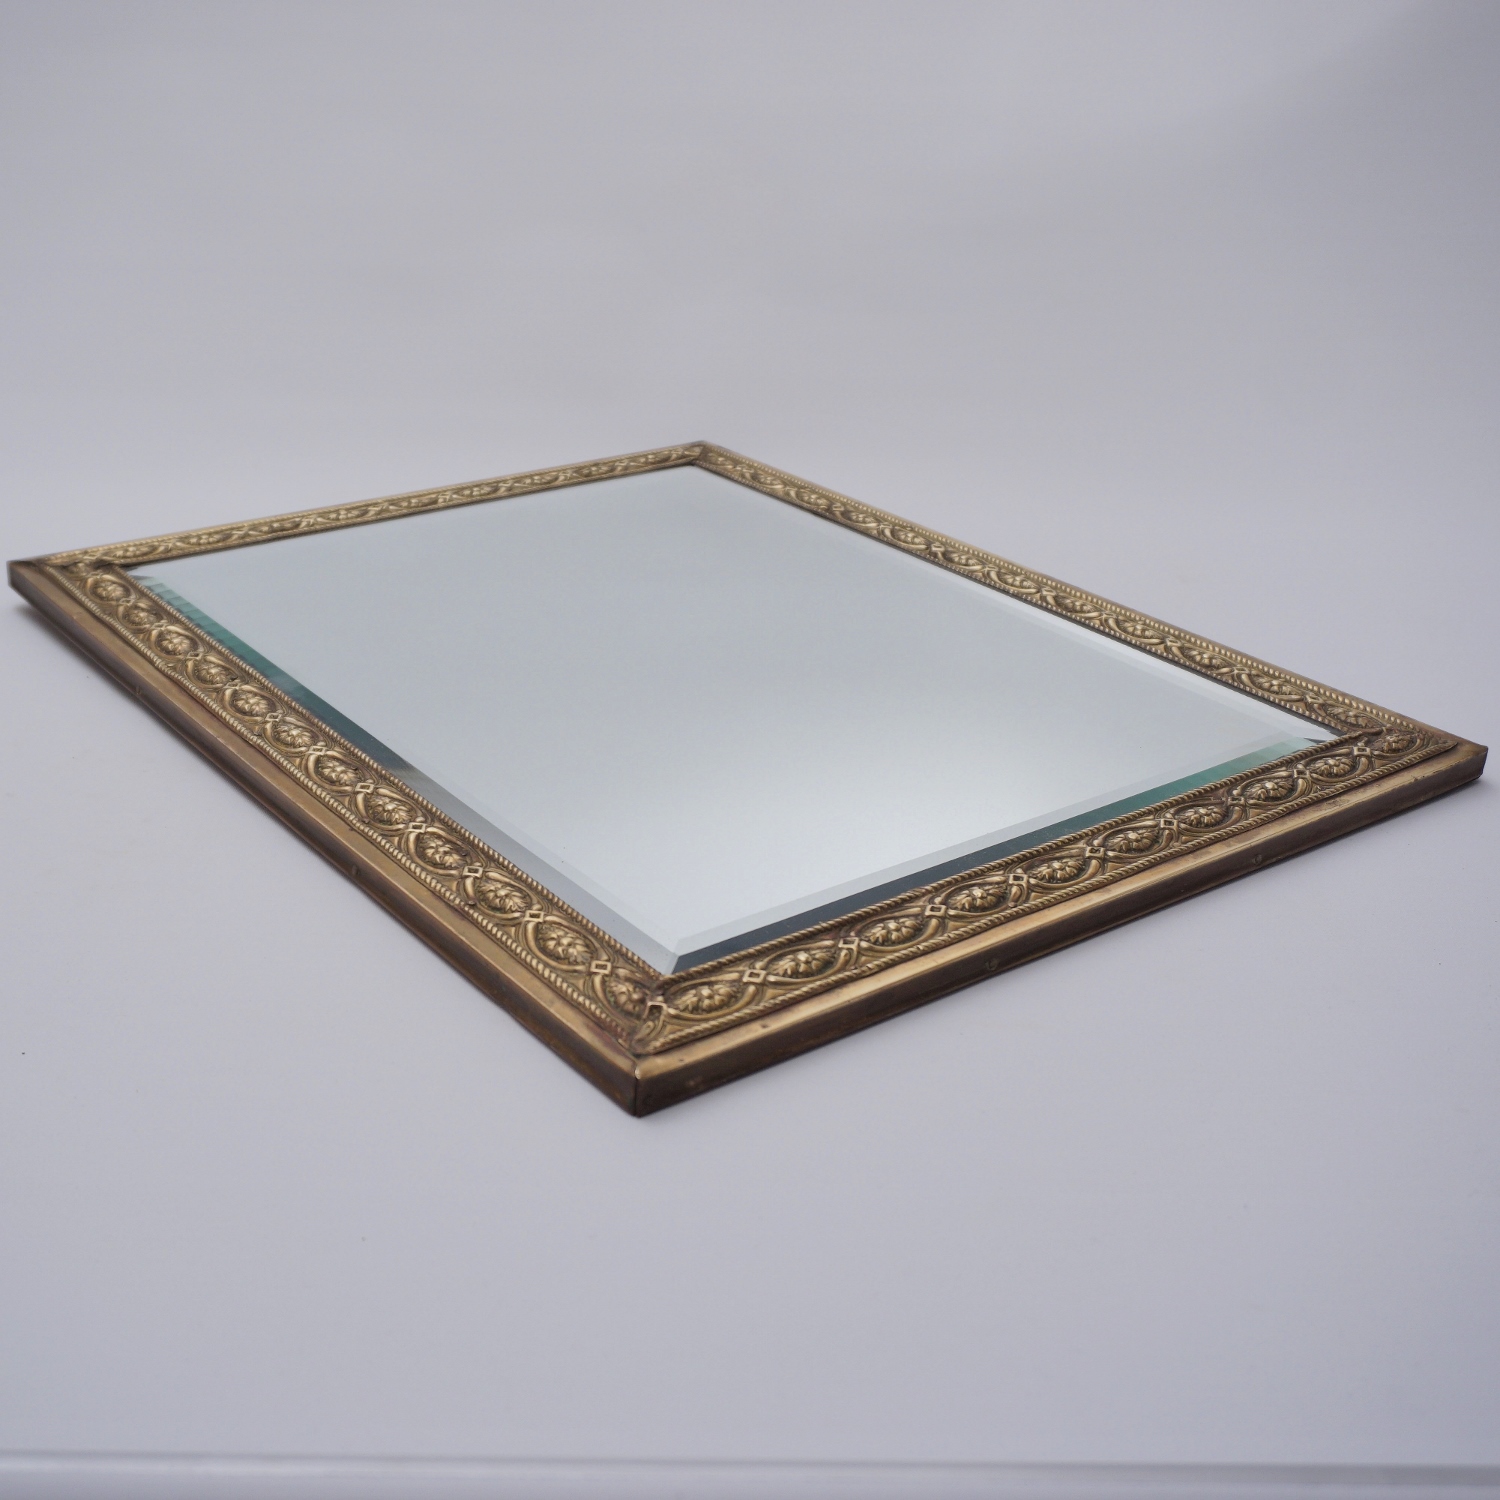  PuTwo Tray Mirror, Gold Dresser Ornate Tray Metal